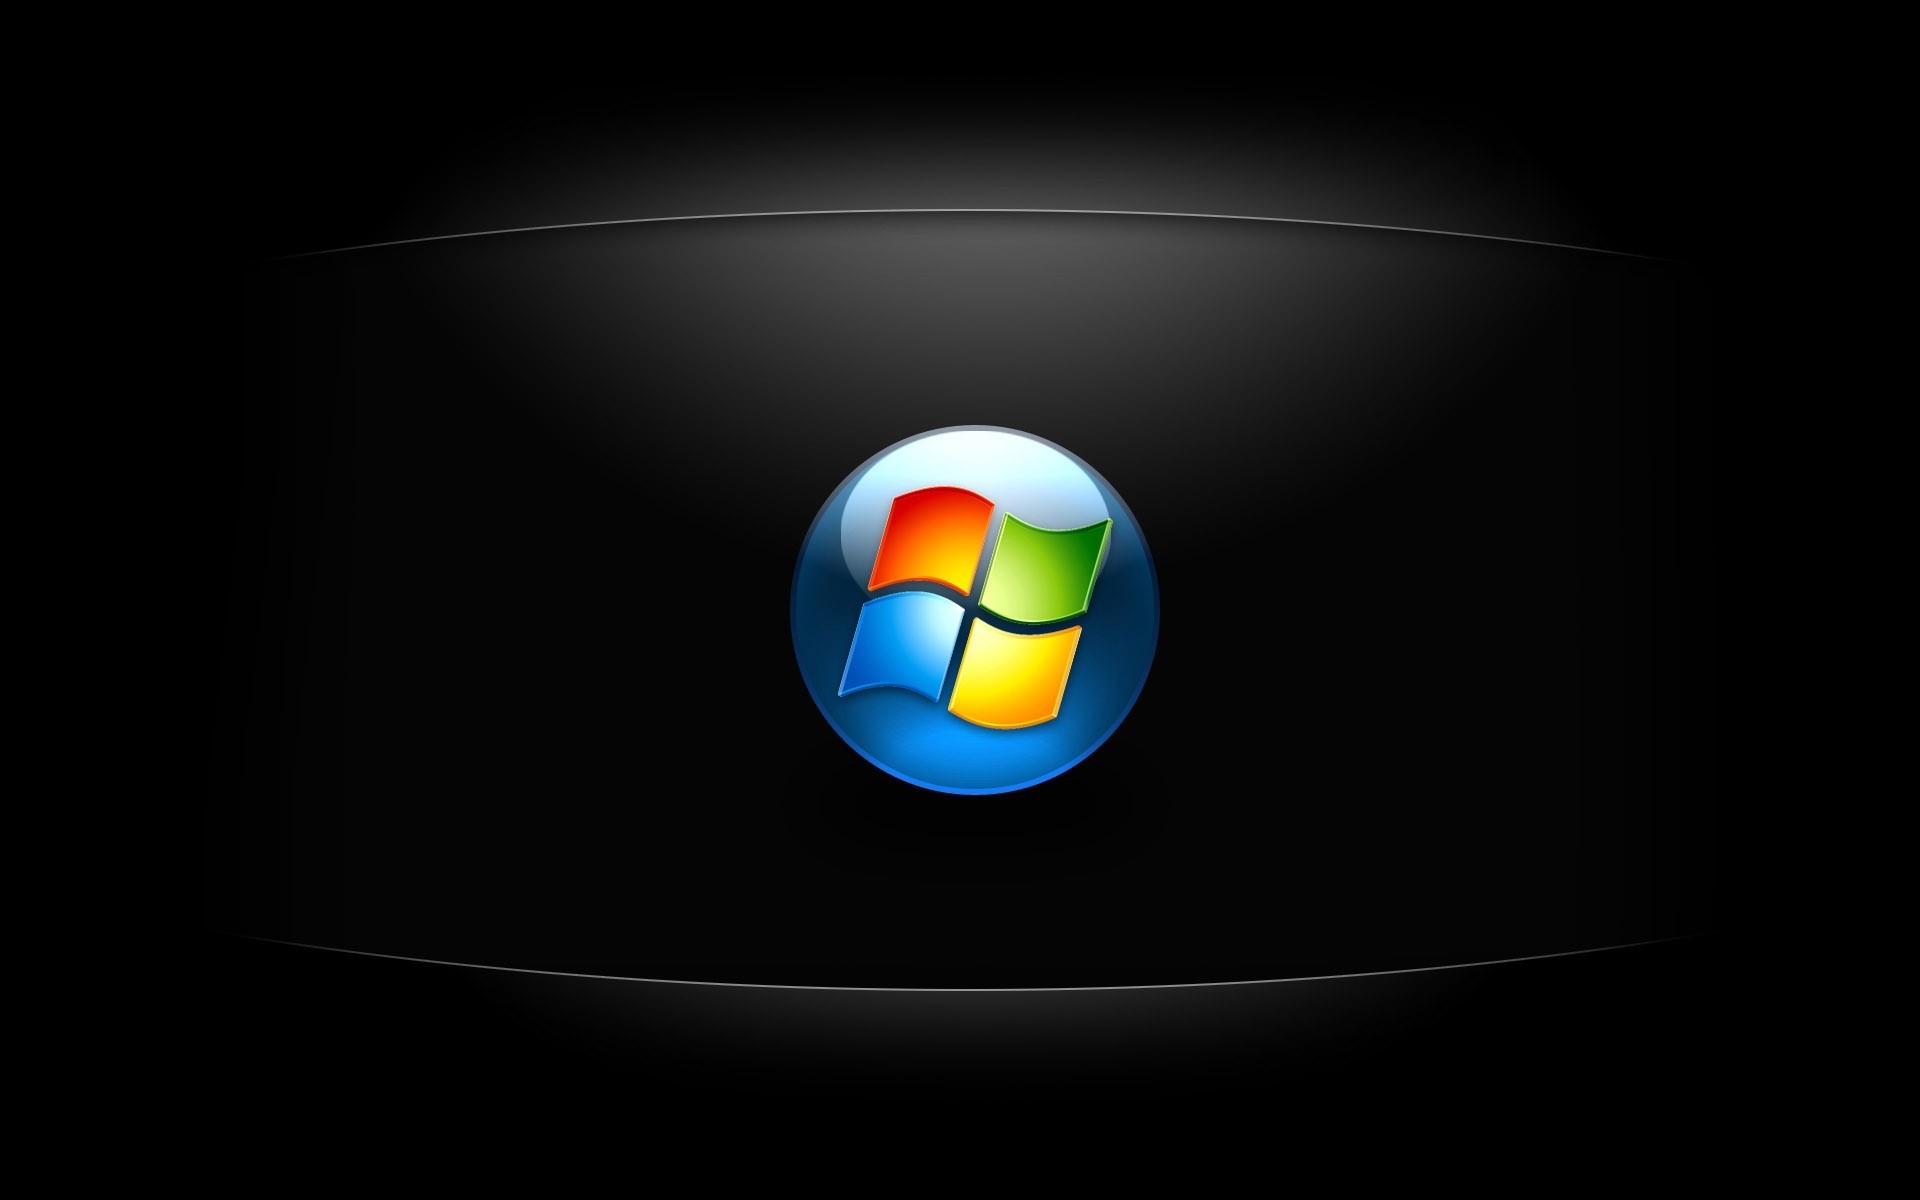 Download windows 7 logo wallpaper HD wallpaper